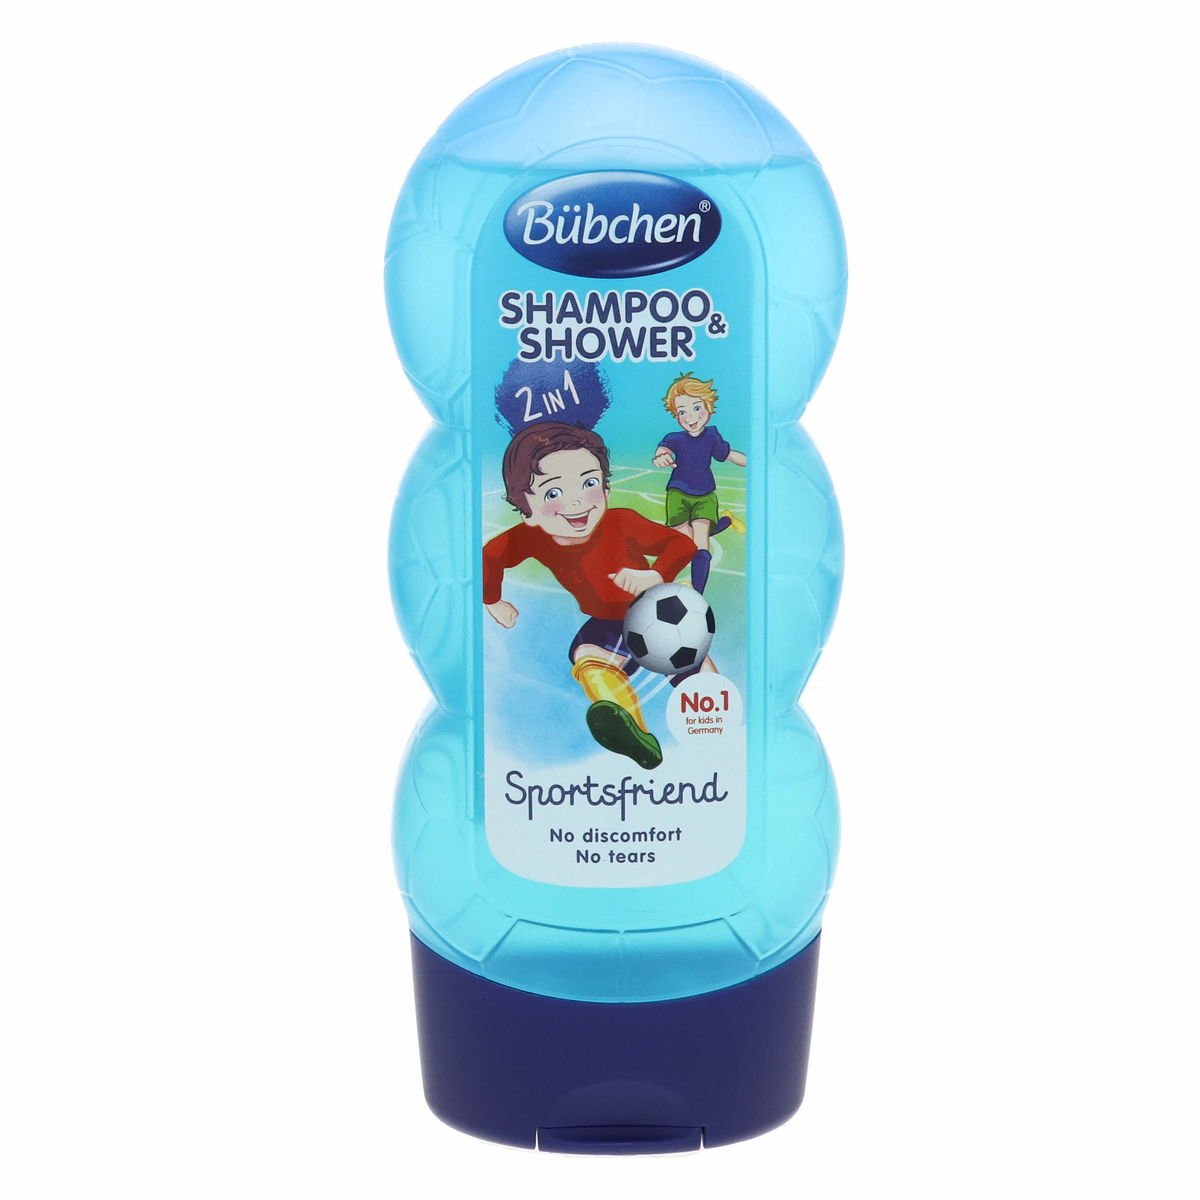 Bubchen Sports friend Shampoo And Shower 230 ml